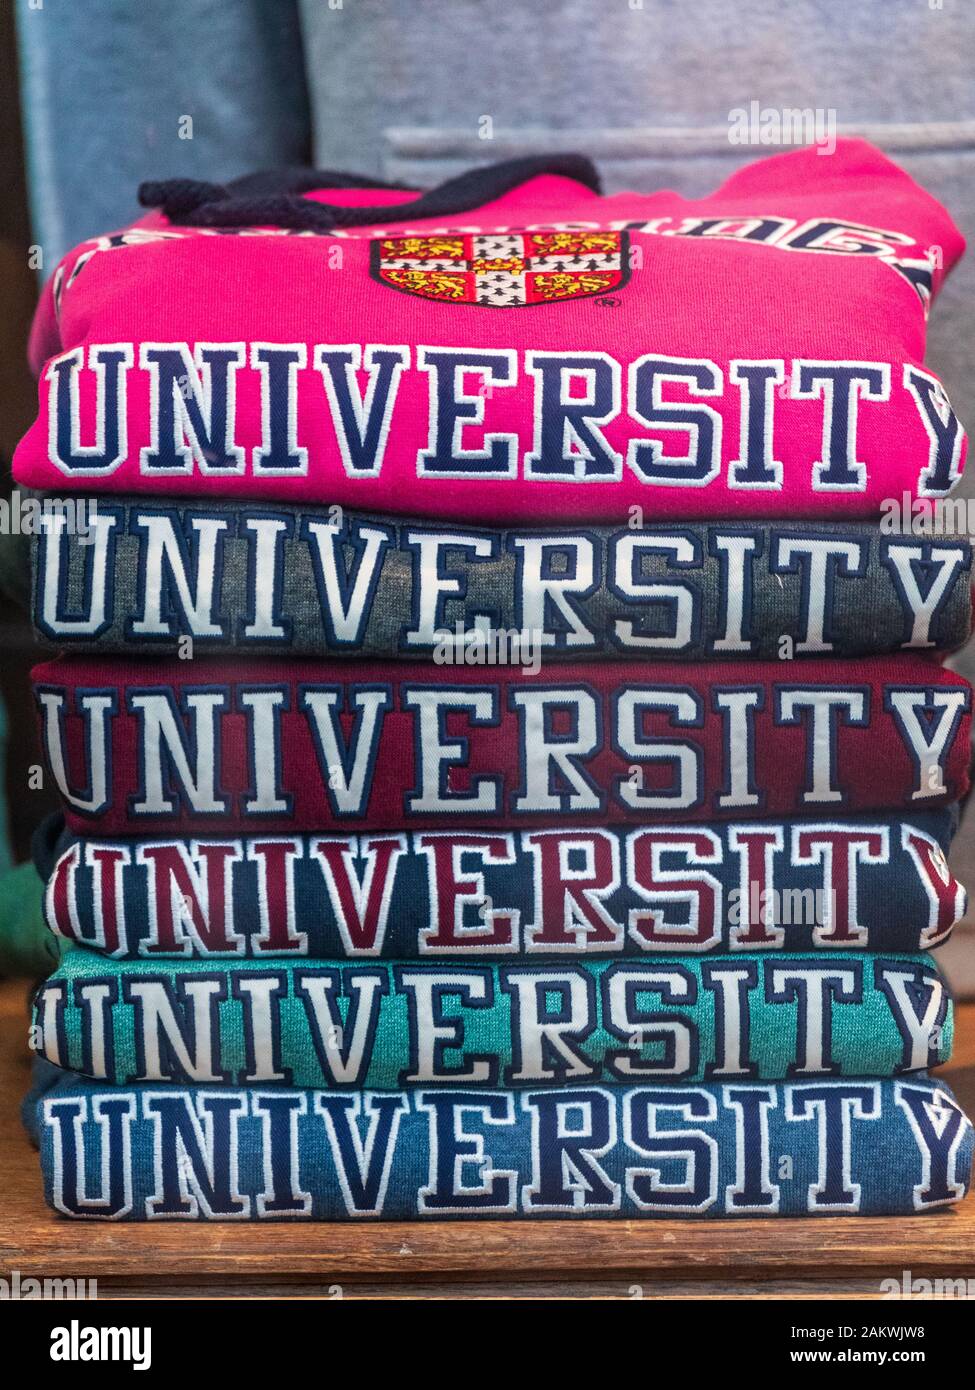 University Sweatshirts, University Hoodies, University Jumpers, University Sweaters. Pile of Cambridge University jumpers in an outfitters window. Stock Photo